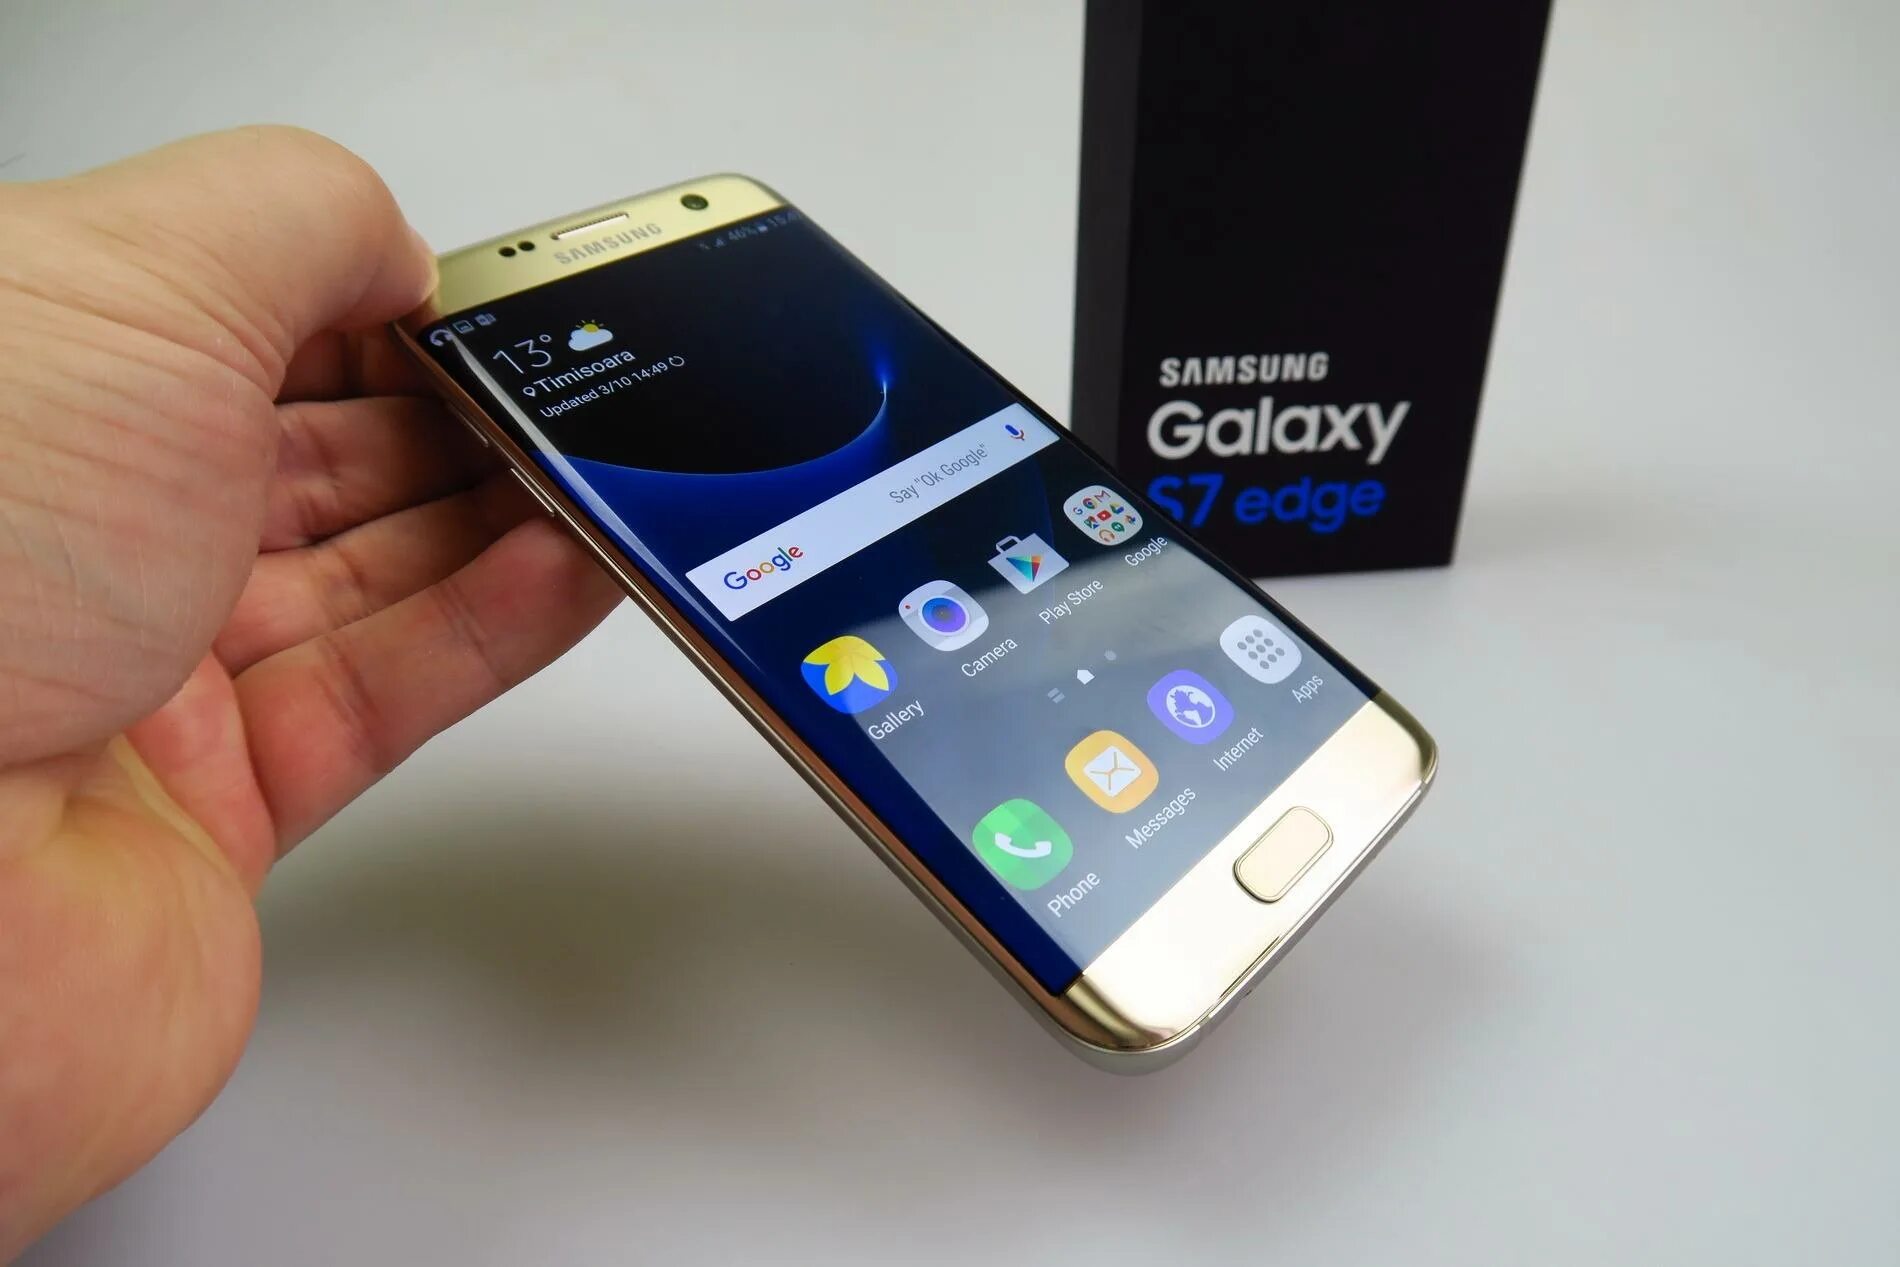 Samsung Galaxy s7 Edge. Samsung s7 Edge Gold. Samsung Galaxy s7 Edge золотой. Samsung Galaxy s7 Edge 32gb Gold. Galaxy 7 edge